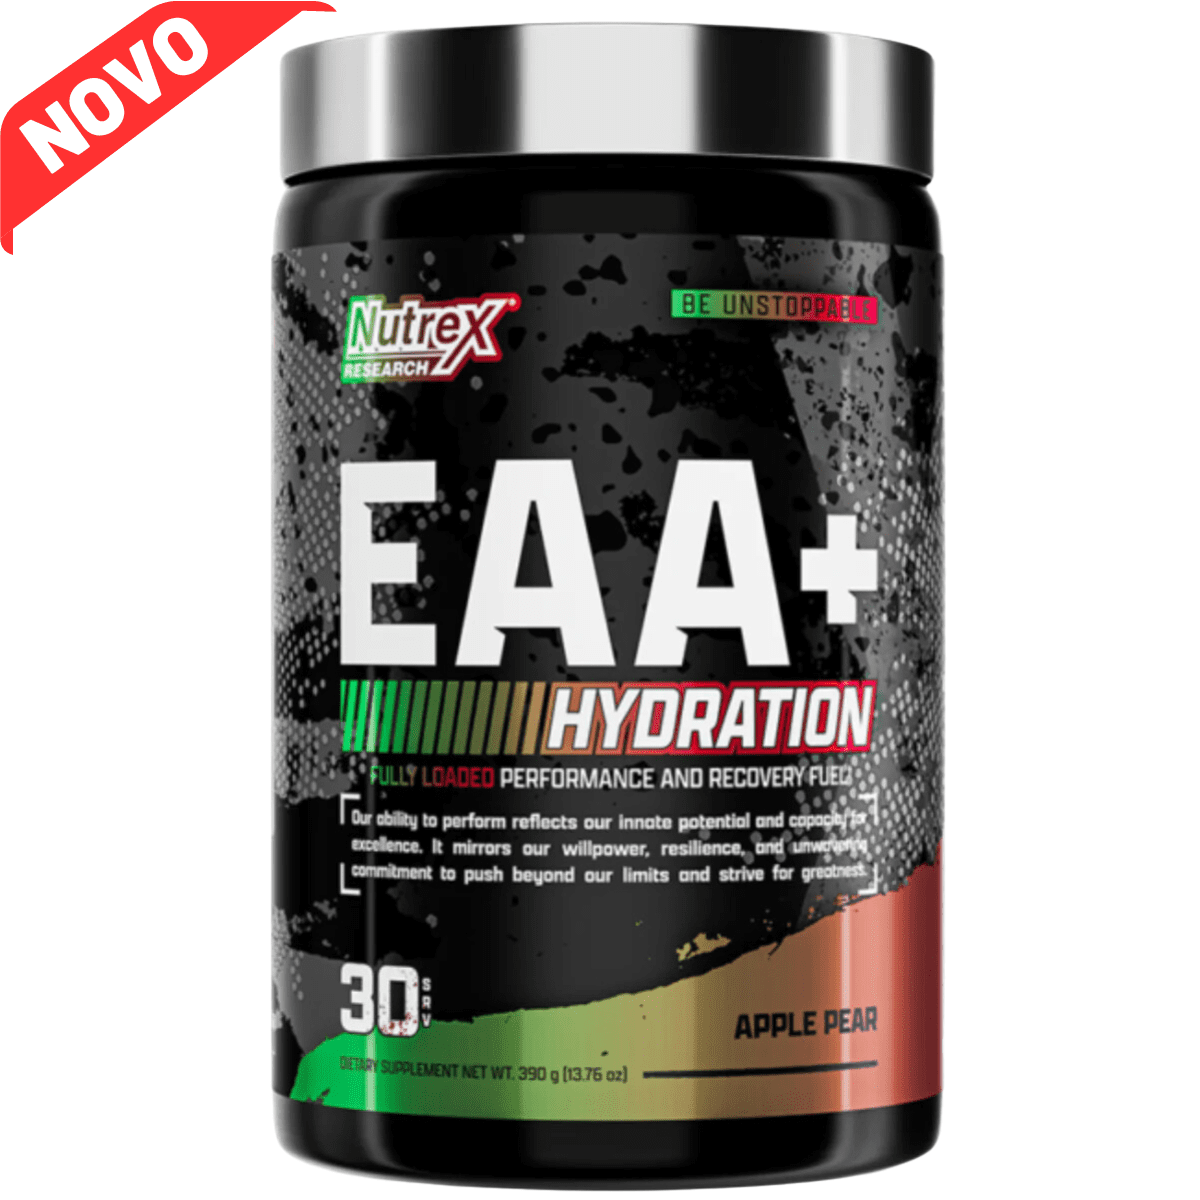 Nutrex EAA+ Hydration - 0